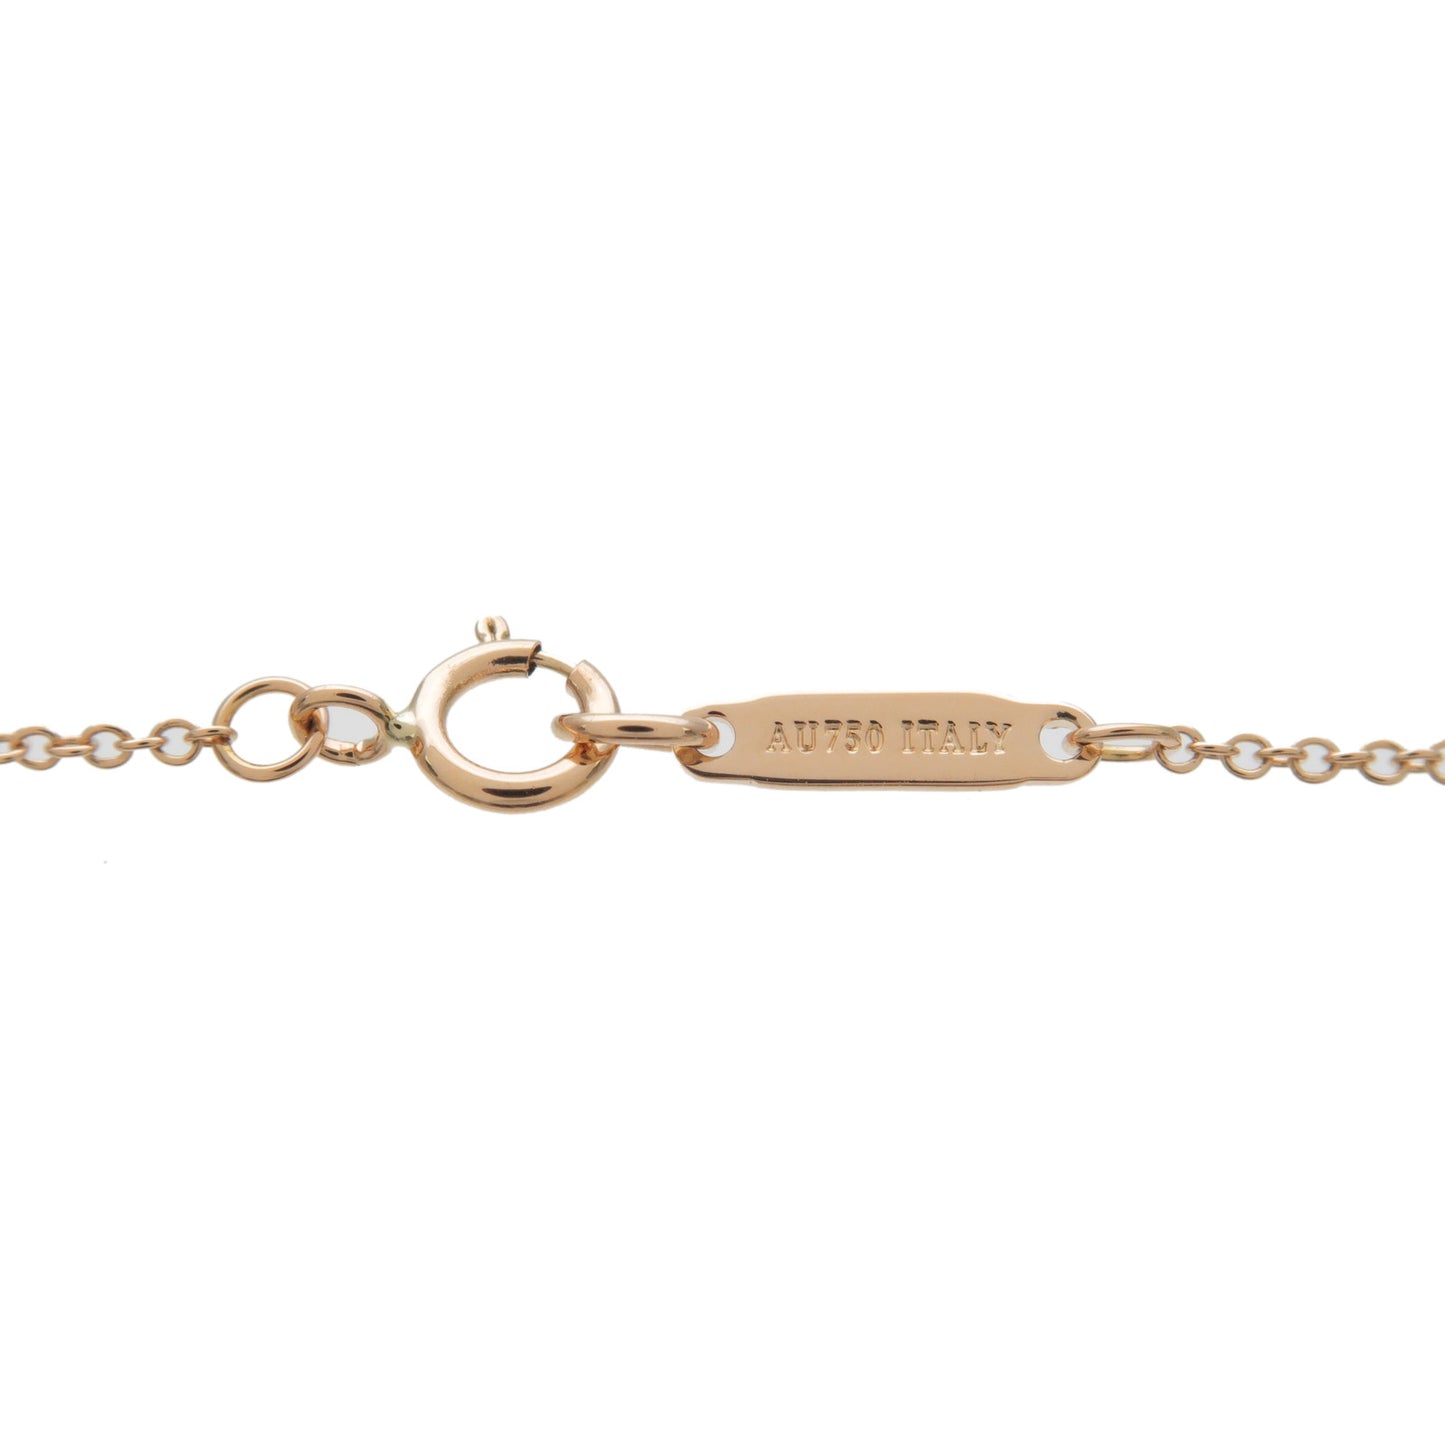 Tiffany&Co. Atlas Open Medallion Diamond Necklace Rose Gold